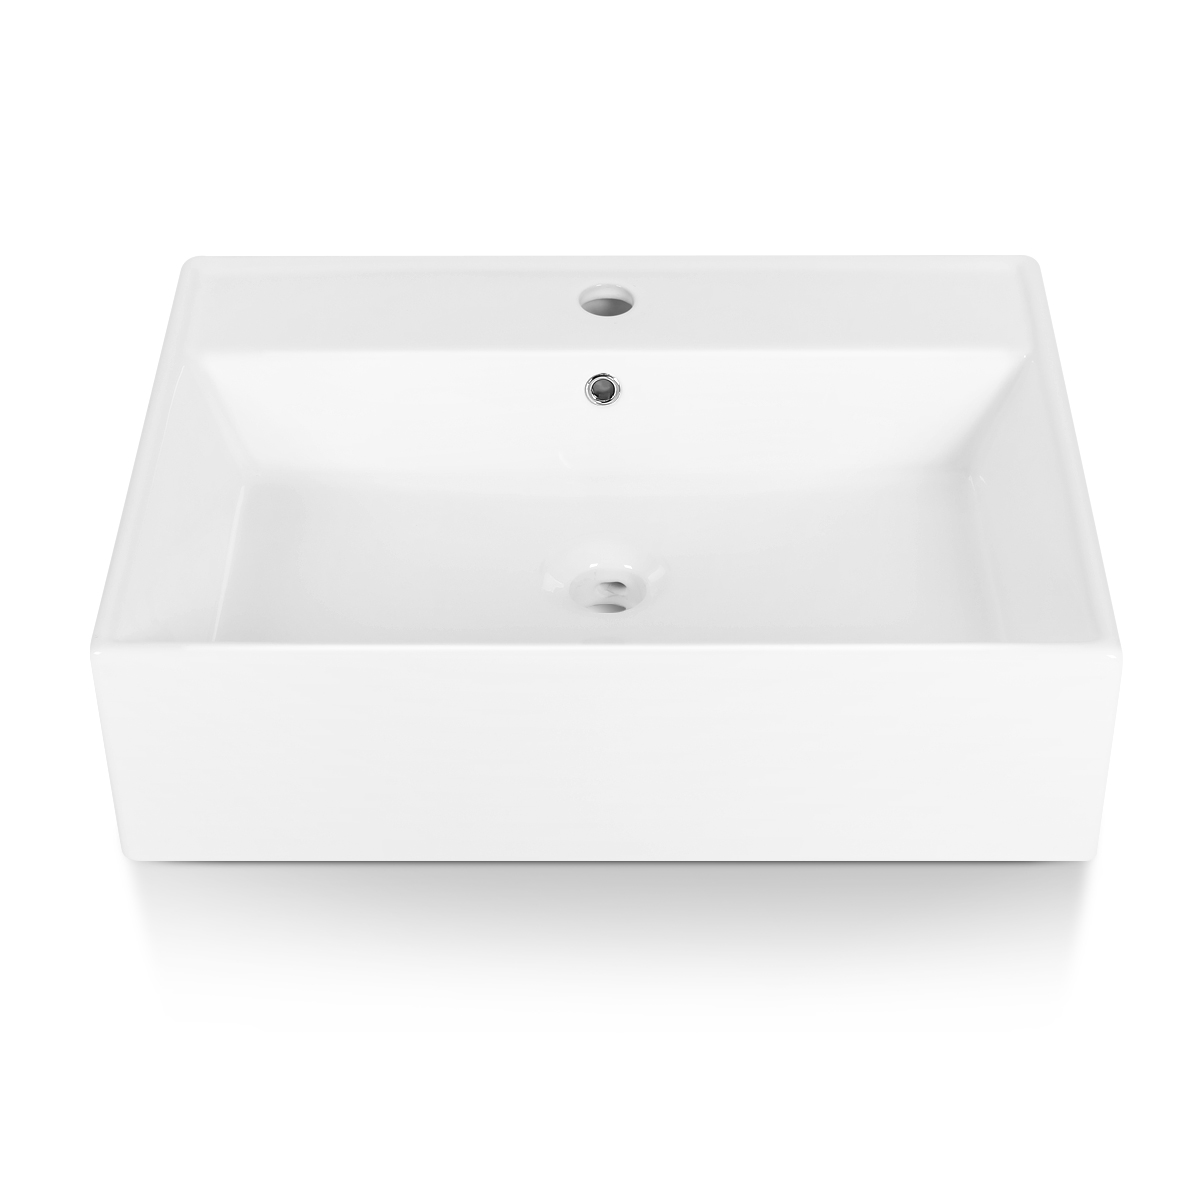 Duko BVS2417A-OL 24" x 17" White Rectangular Ceramic Countertop Bathroom Vanity Vessel Sink